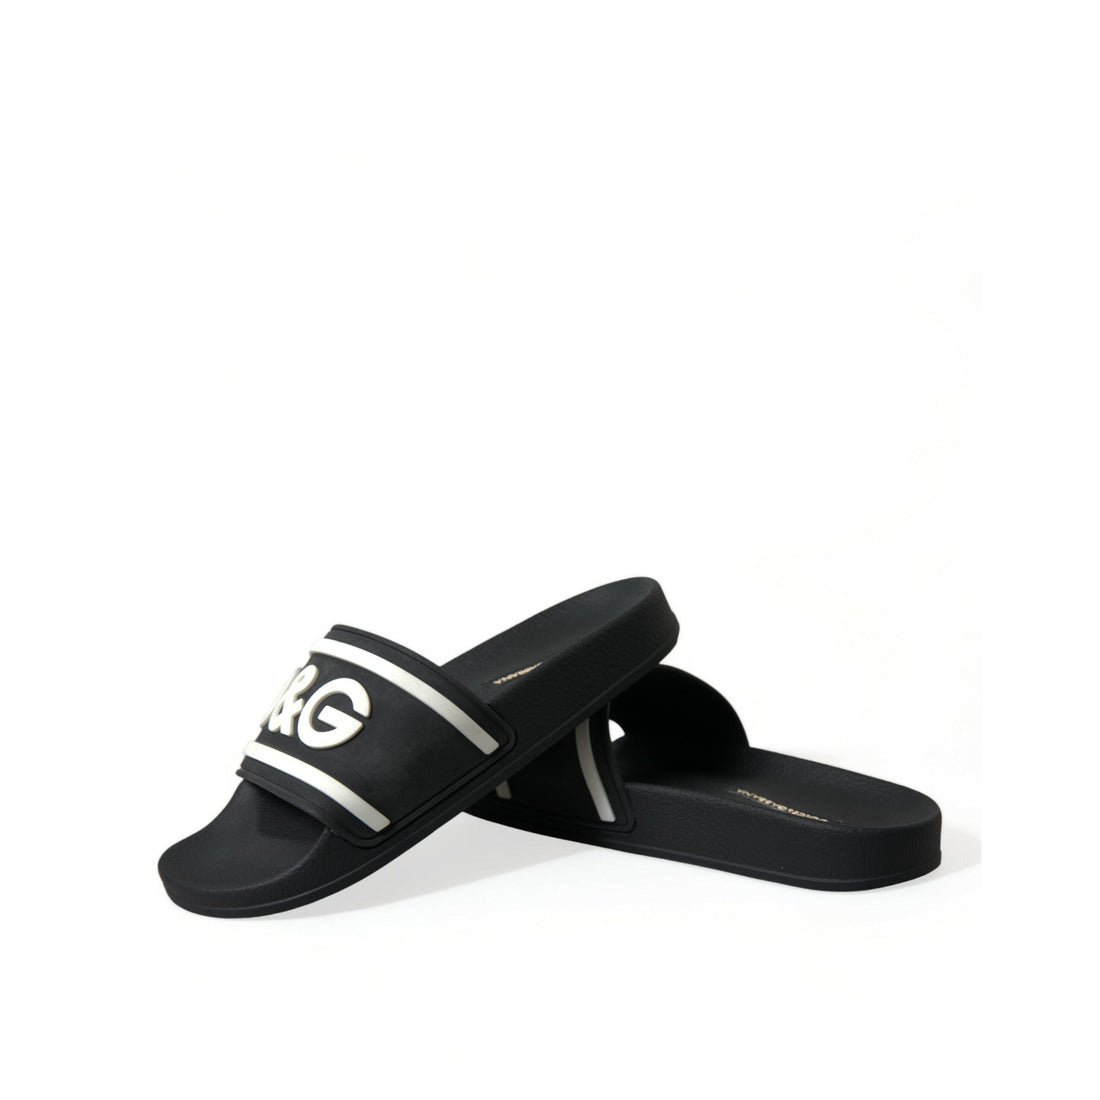 Dolce & Gabbana Black Rubber Beachwear Slippers Sandals Shoes